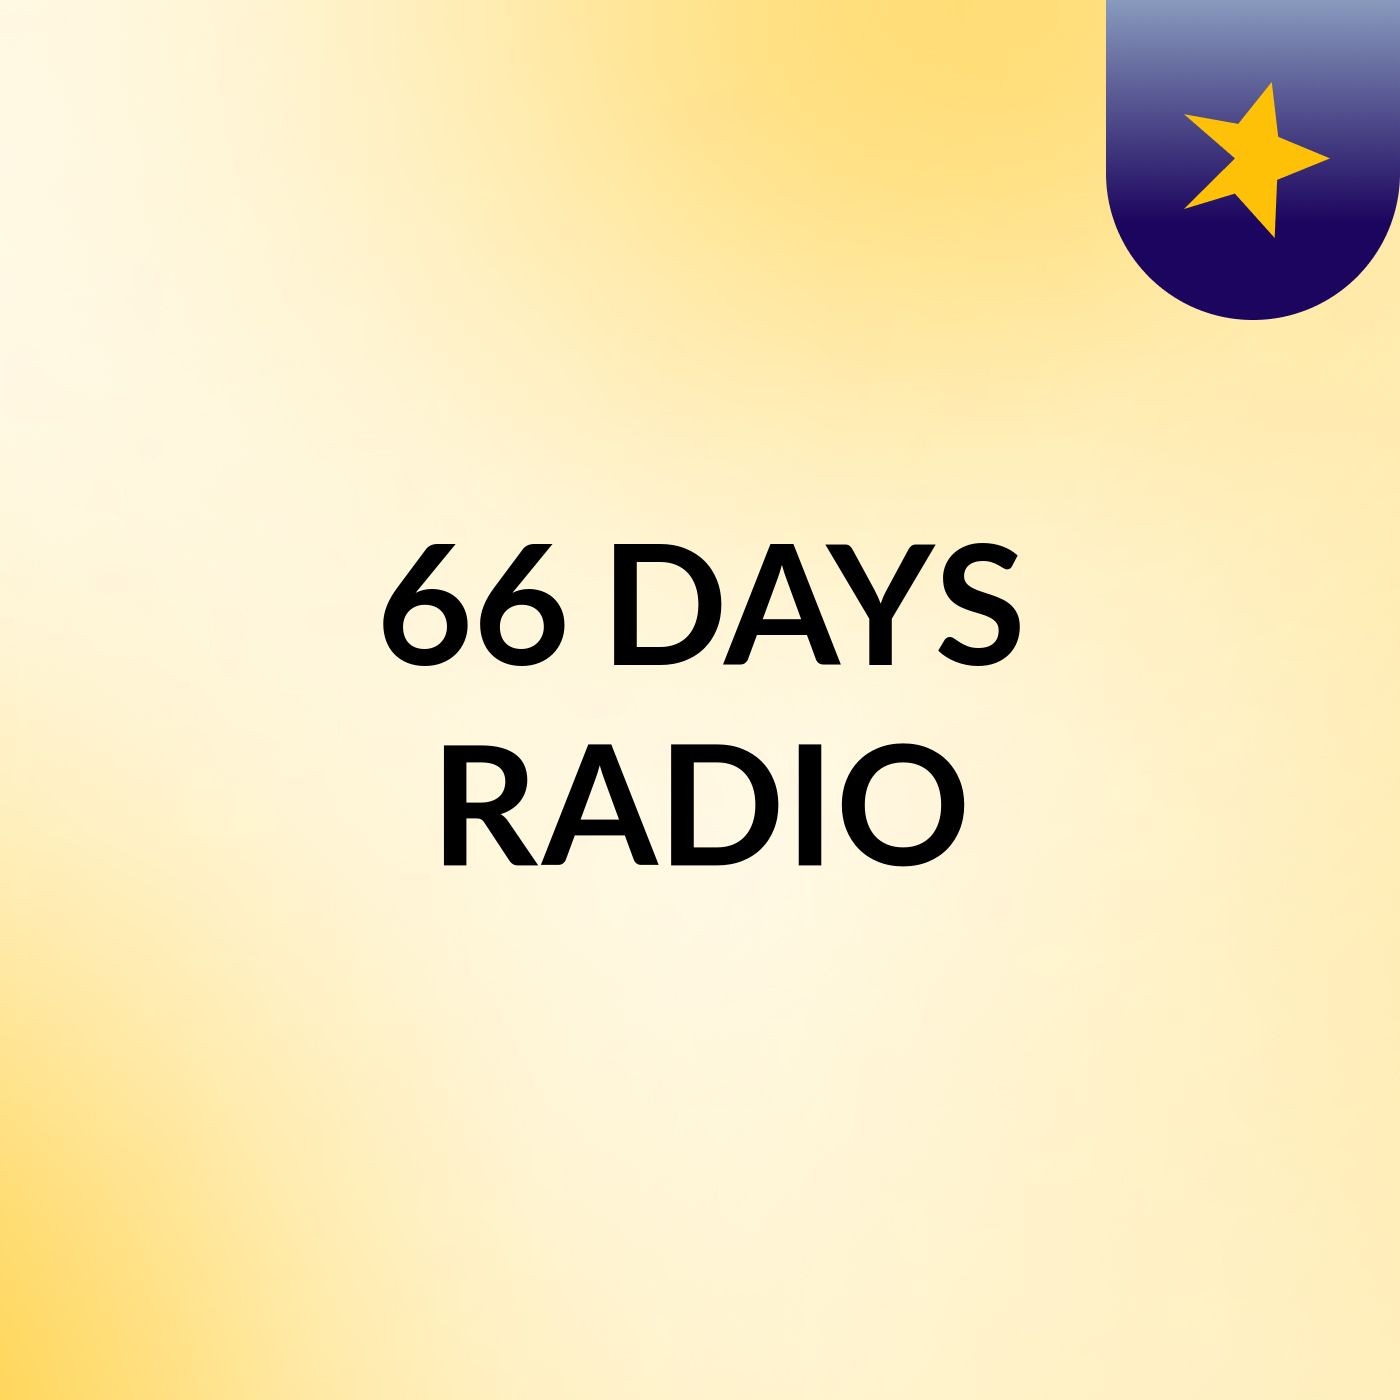 66 DAYS RADIO